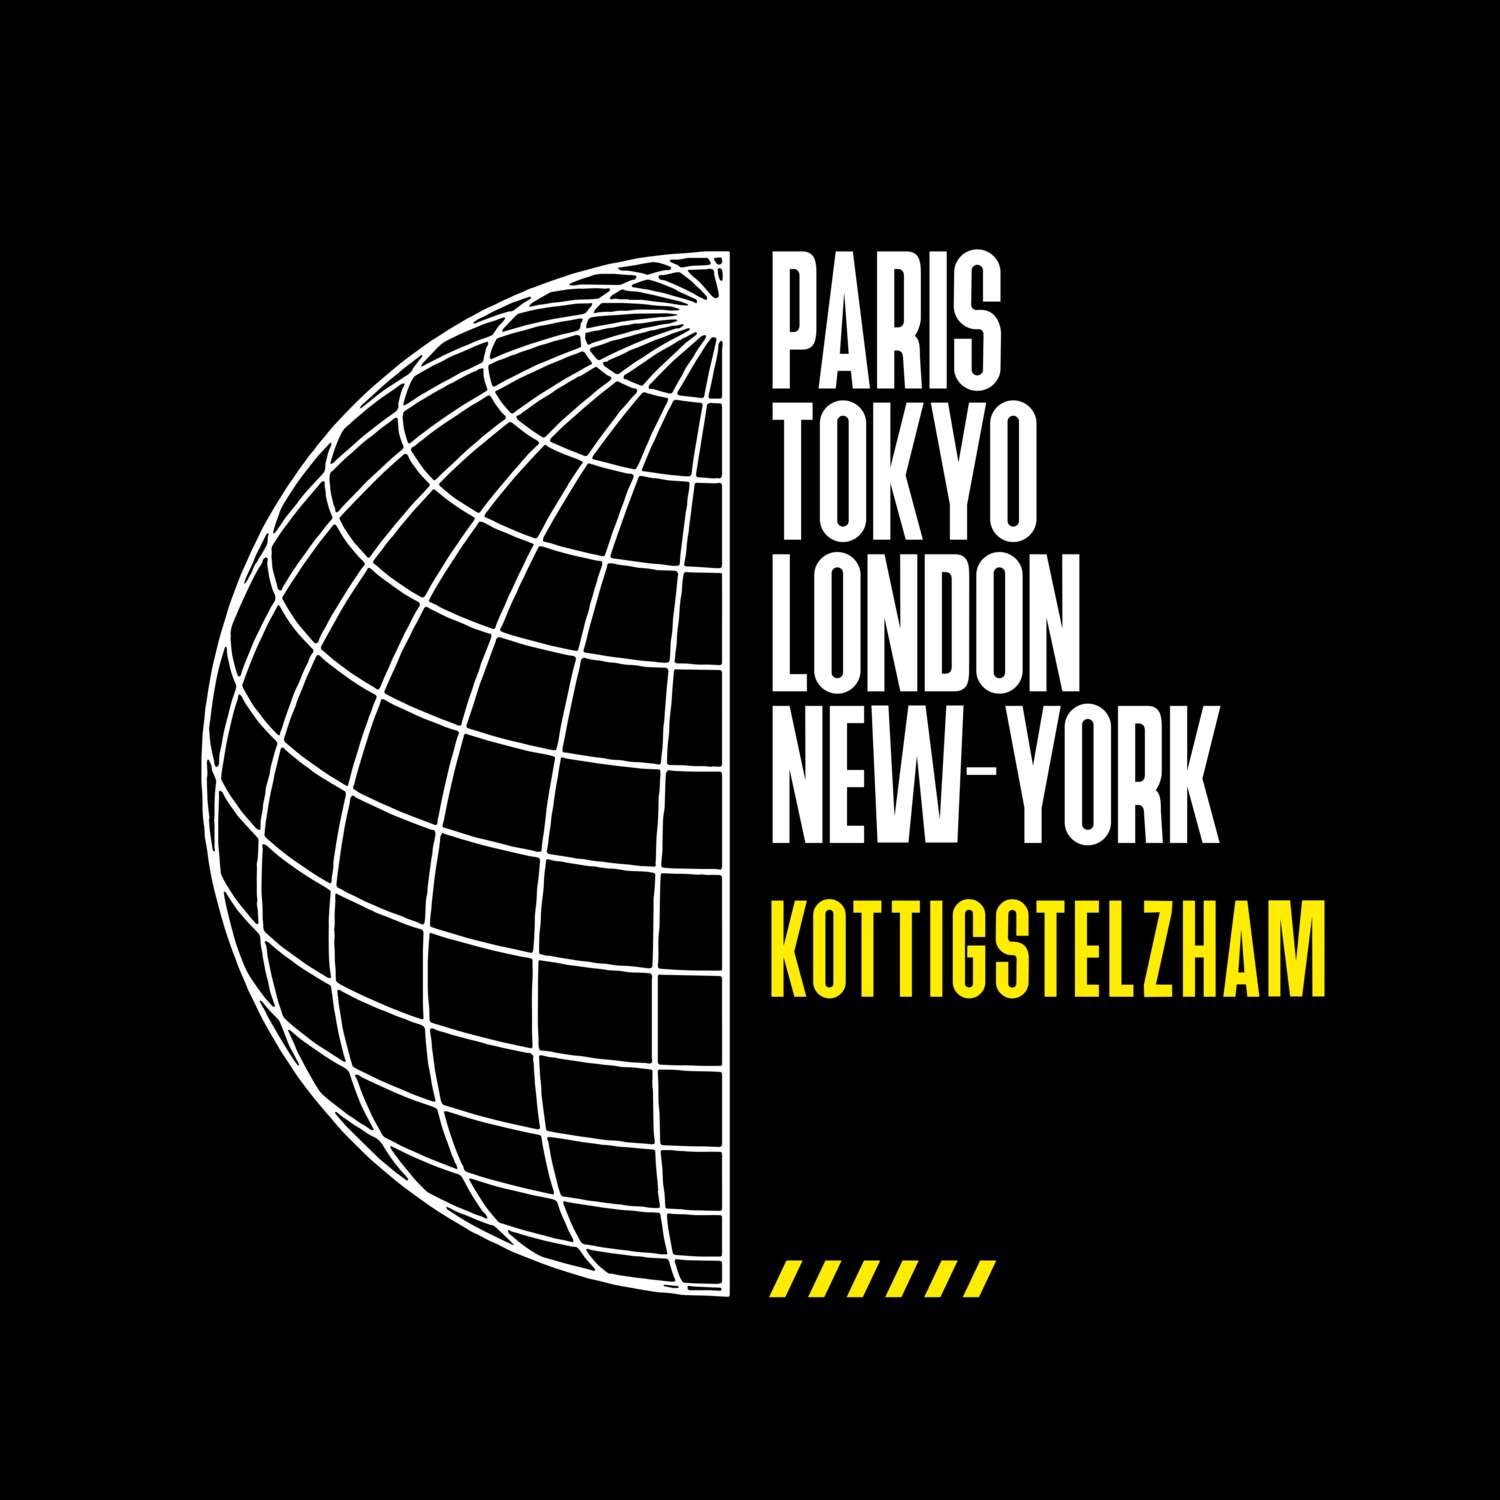 Kottigstelzham T-Shirt »Paris Tokyo London«